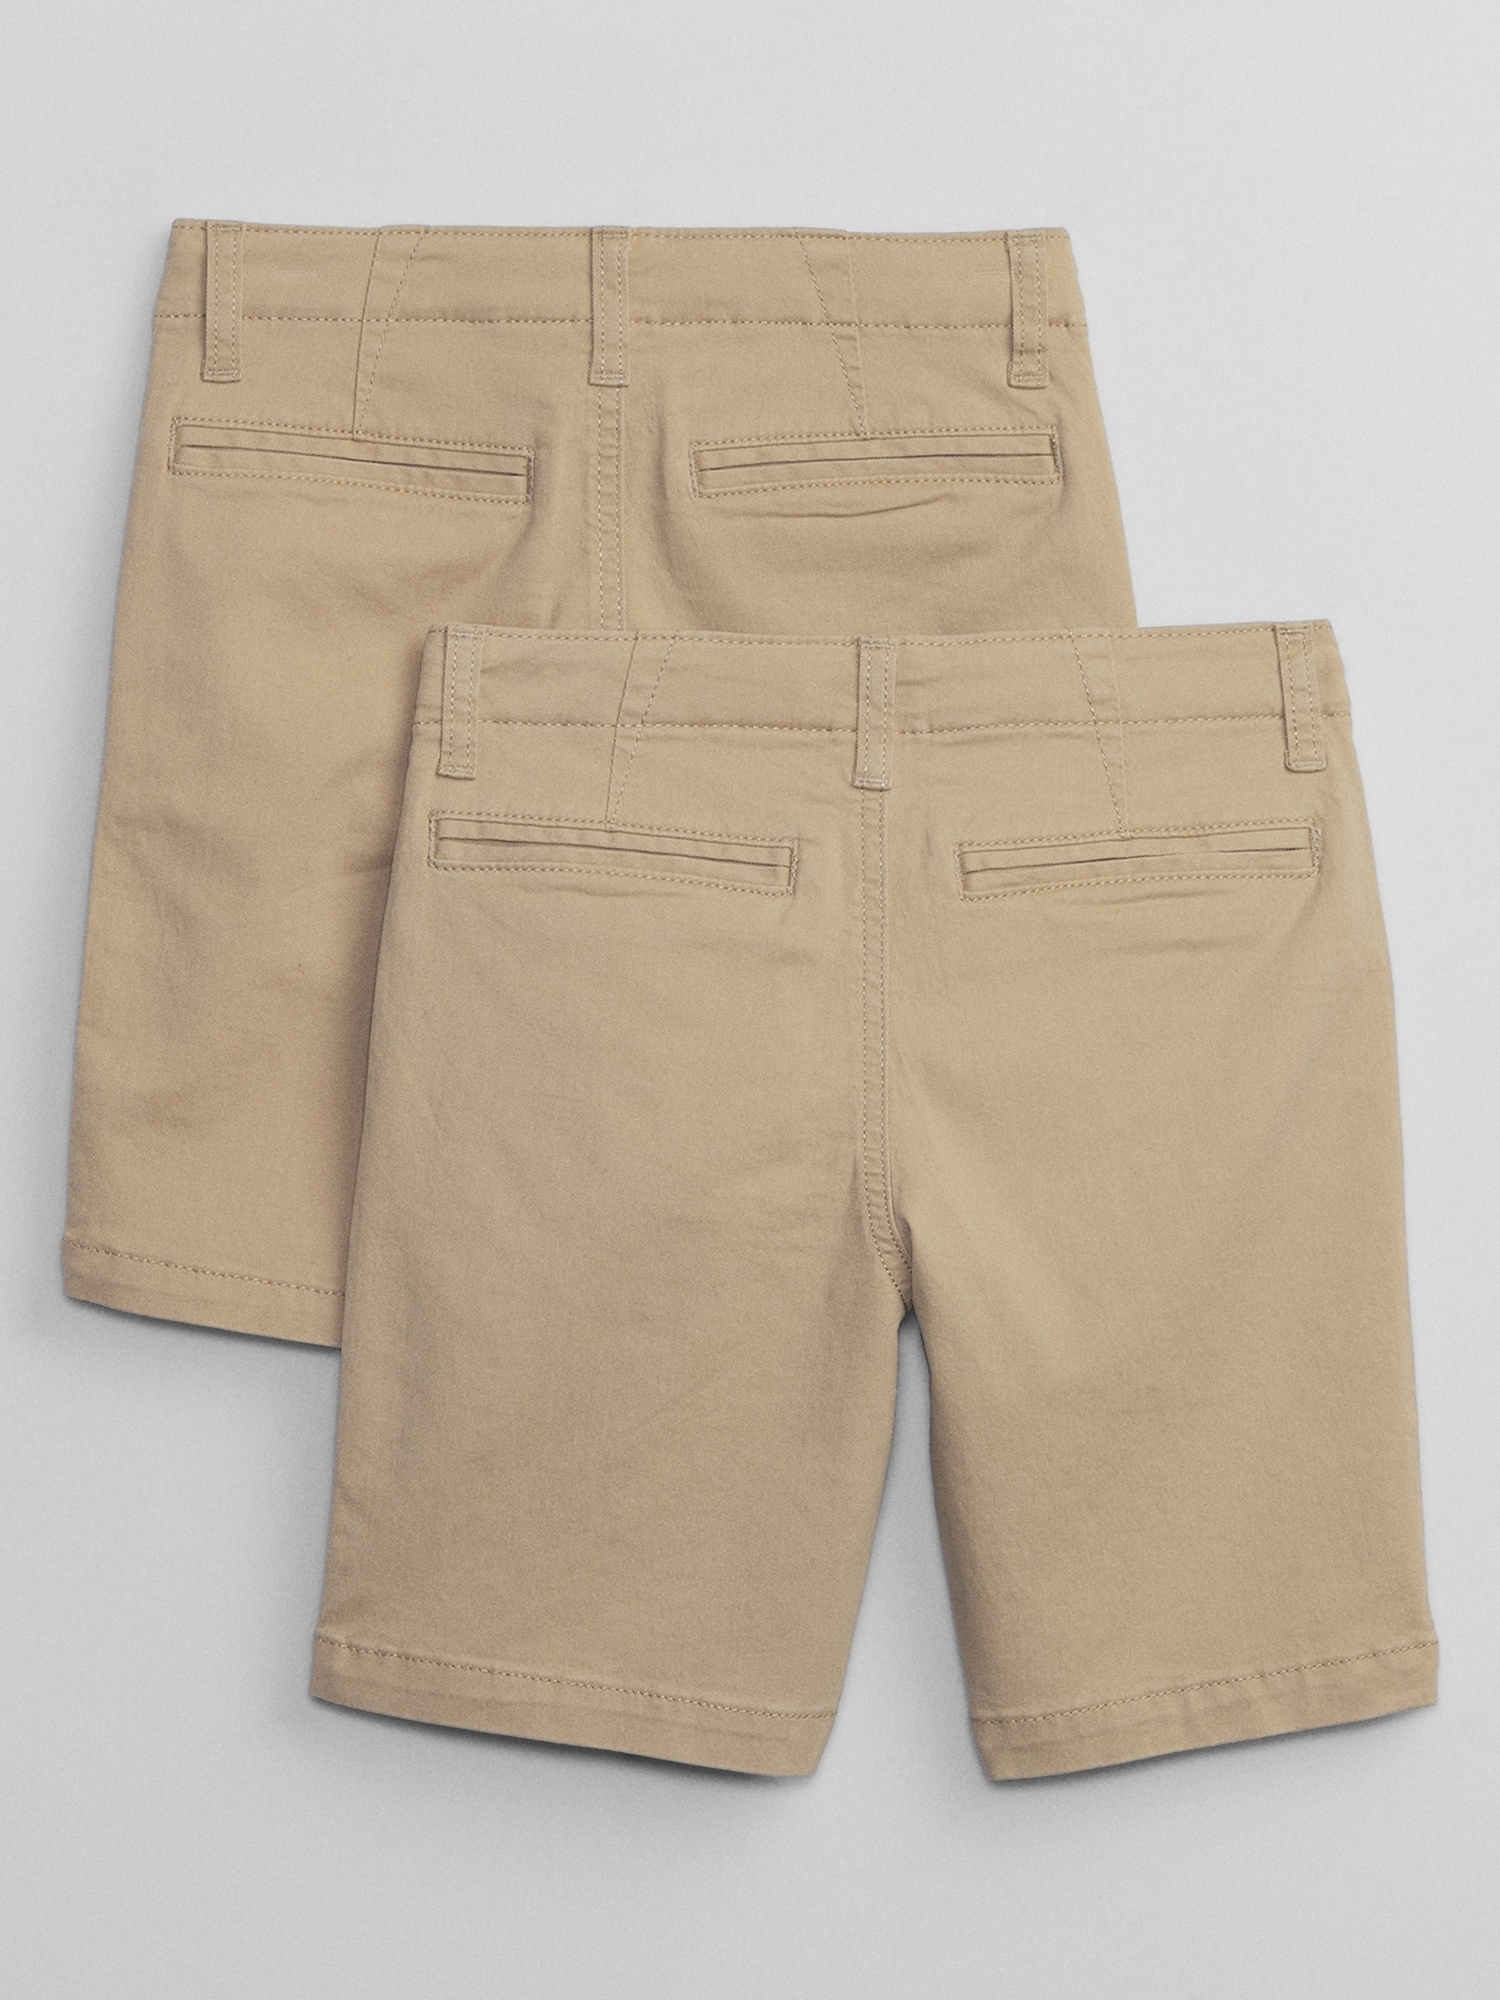 Kids Uniform Twill Shorts (2-Pack) | Gap Factory